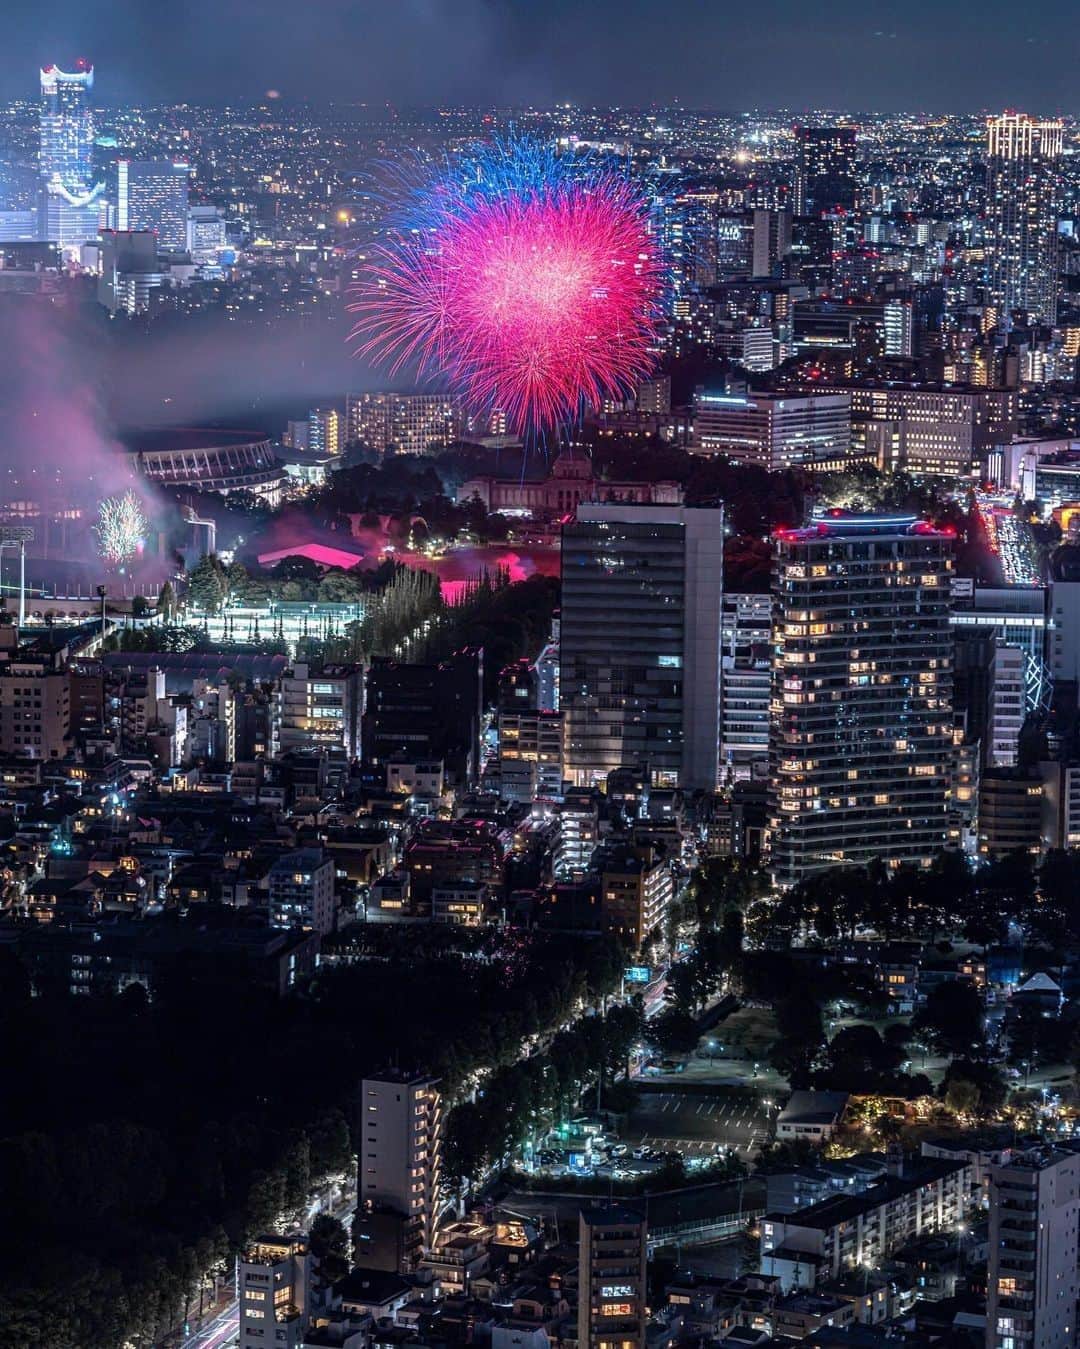 Tokyo City View 六本木ヒルズ展望台のインスタグラム：「-----  大迫力の神宮外苑花火大会をとらえた一枚。  ぐるりと眺望をお楽しみいただける東京シティビューでは夏の風物詩・花火の様子も捉えることが出来るベストスポット。  ----- 📸 by　@tomomon1227 様 素敵なお写真のご投稿をありがとうございました✨  当アカウントでは、 @tokyocityview をタグ付け、または【#六本木ヒルズ展望台】【#東京シティビュー】【#スカイデッキ】をつけて投稿していただいた投稿者様の素敵なお写真をご紹介していきます。 皆様の投稿をお待ちしております。 ----- #六本木ヒルズ展望台 #スカイデッキ #東京シティビュー #富士山 #展望台 #絶景 #景色 #荒谷良一 #RoppongiHillsObservation #skydeck #TokyoCityView #FujiMountain #TCV #Tokyo #japantravel #tokyo #roppongi #RyoichiAratani #travelgram #japantrip #japan_daytime_view #japan_of_insta #bestjapanpics #tokyomuseum #artoftheday」